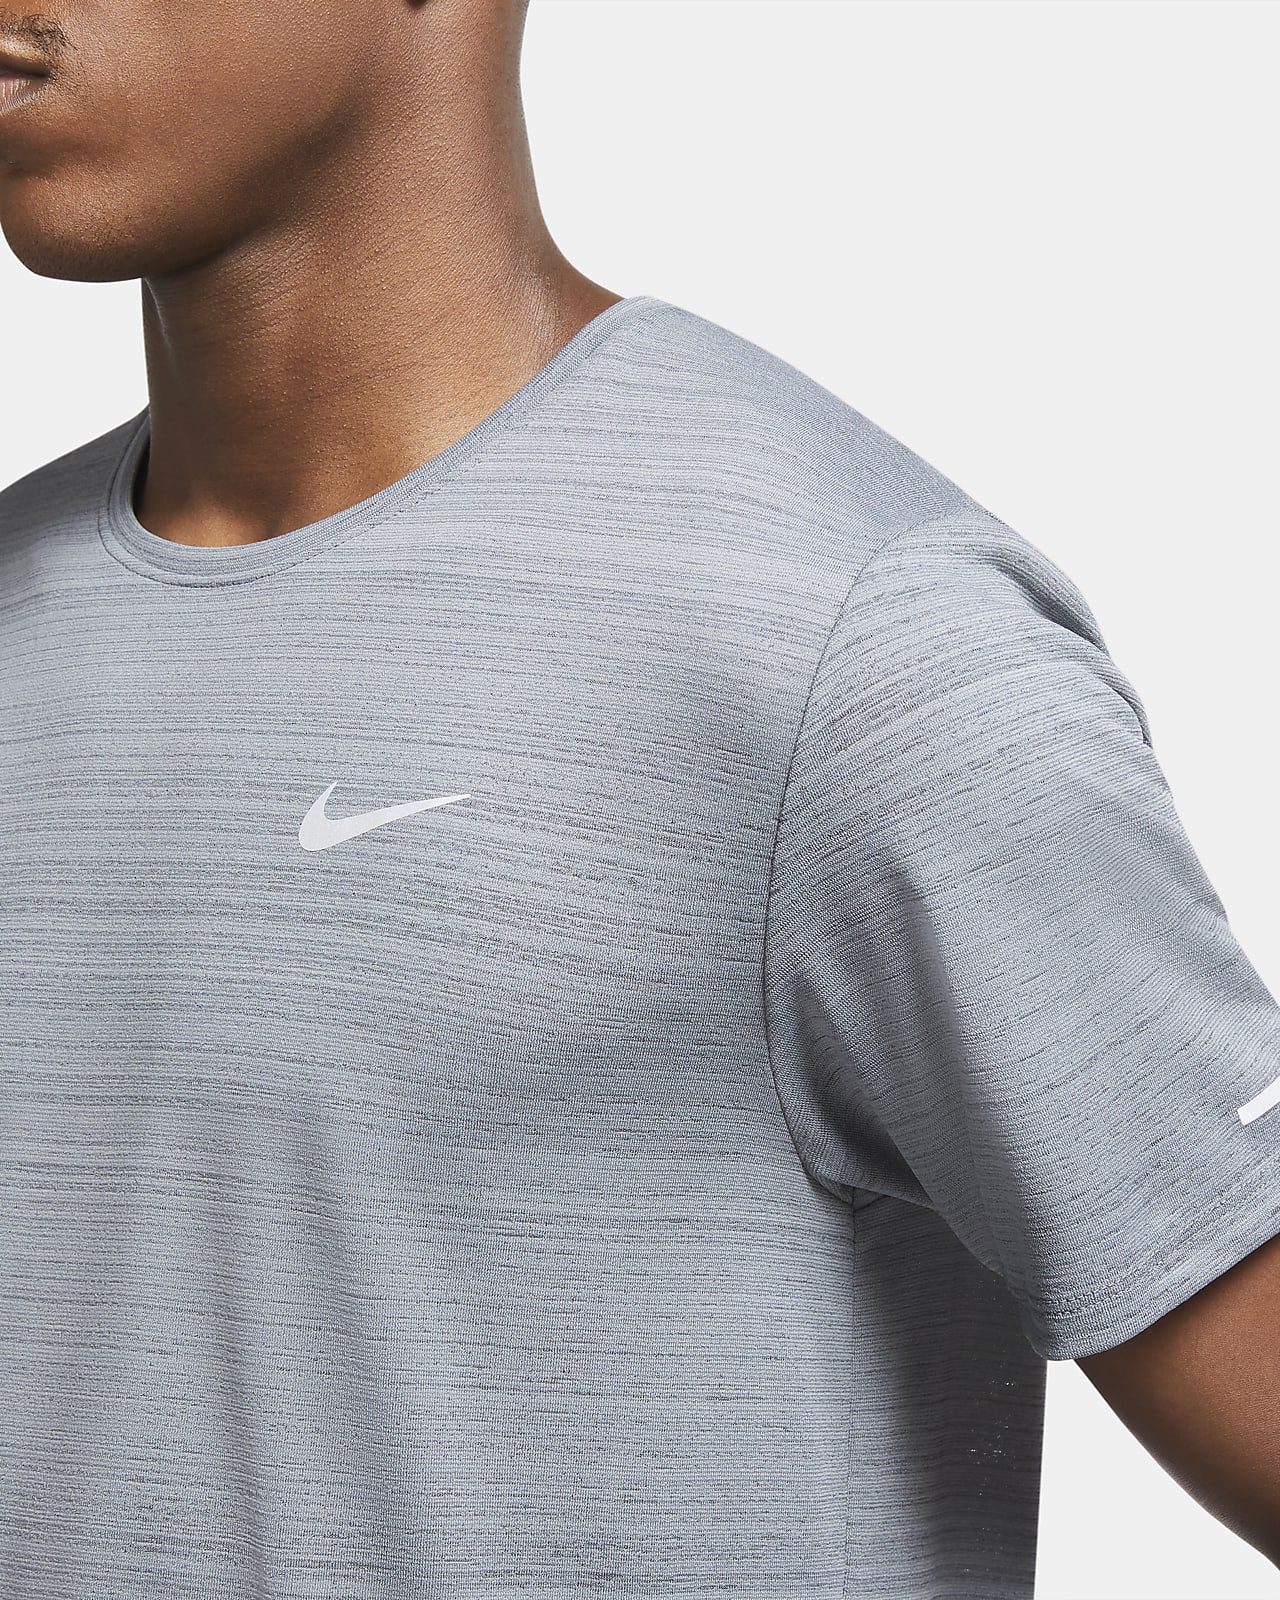 Camiseta de running para hombre Nike Dri-FIT Miler. Nike.com